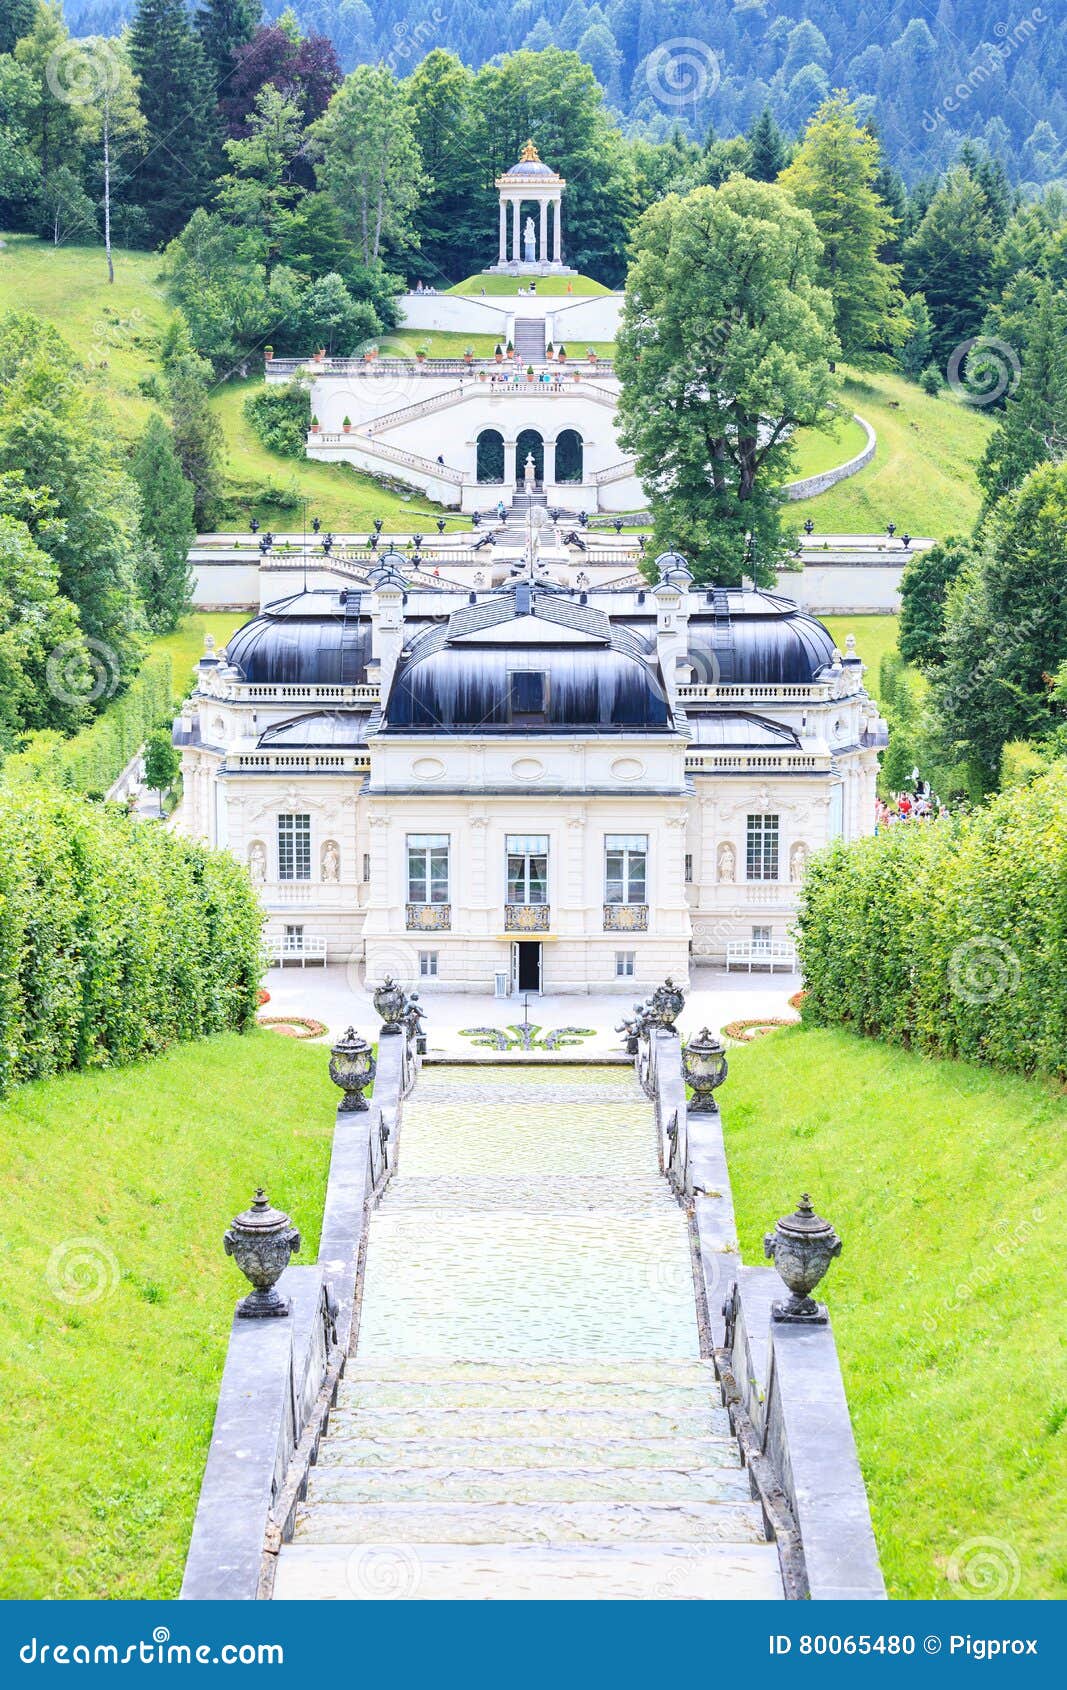 linderhof palace in baviera, germany